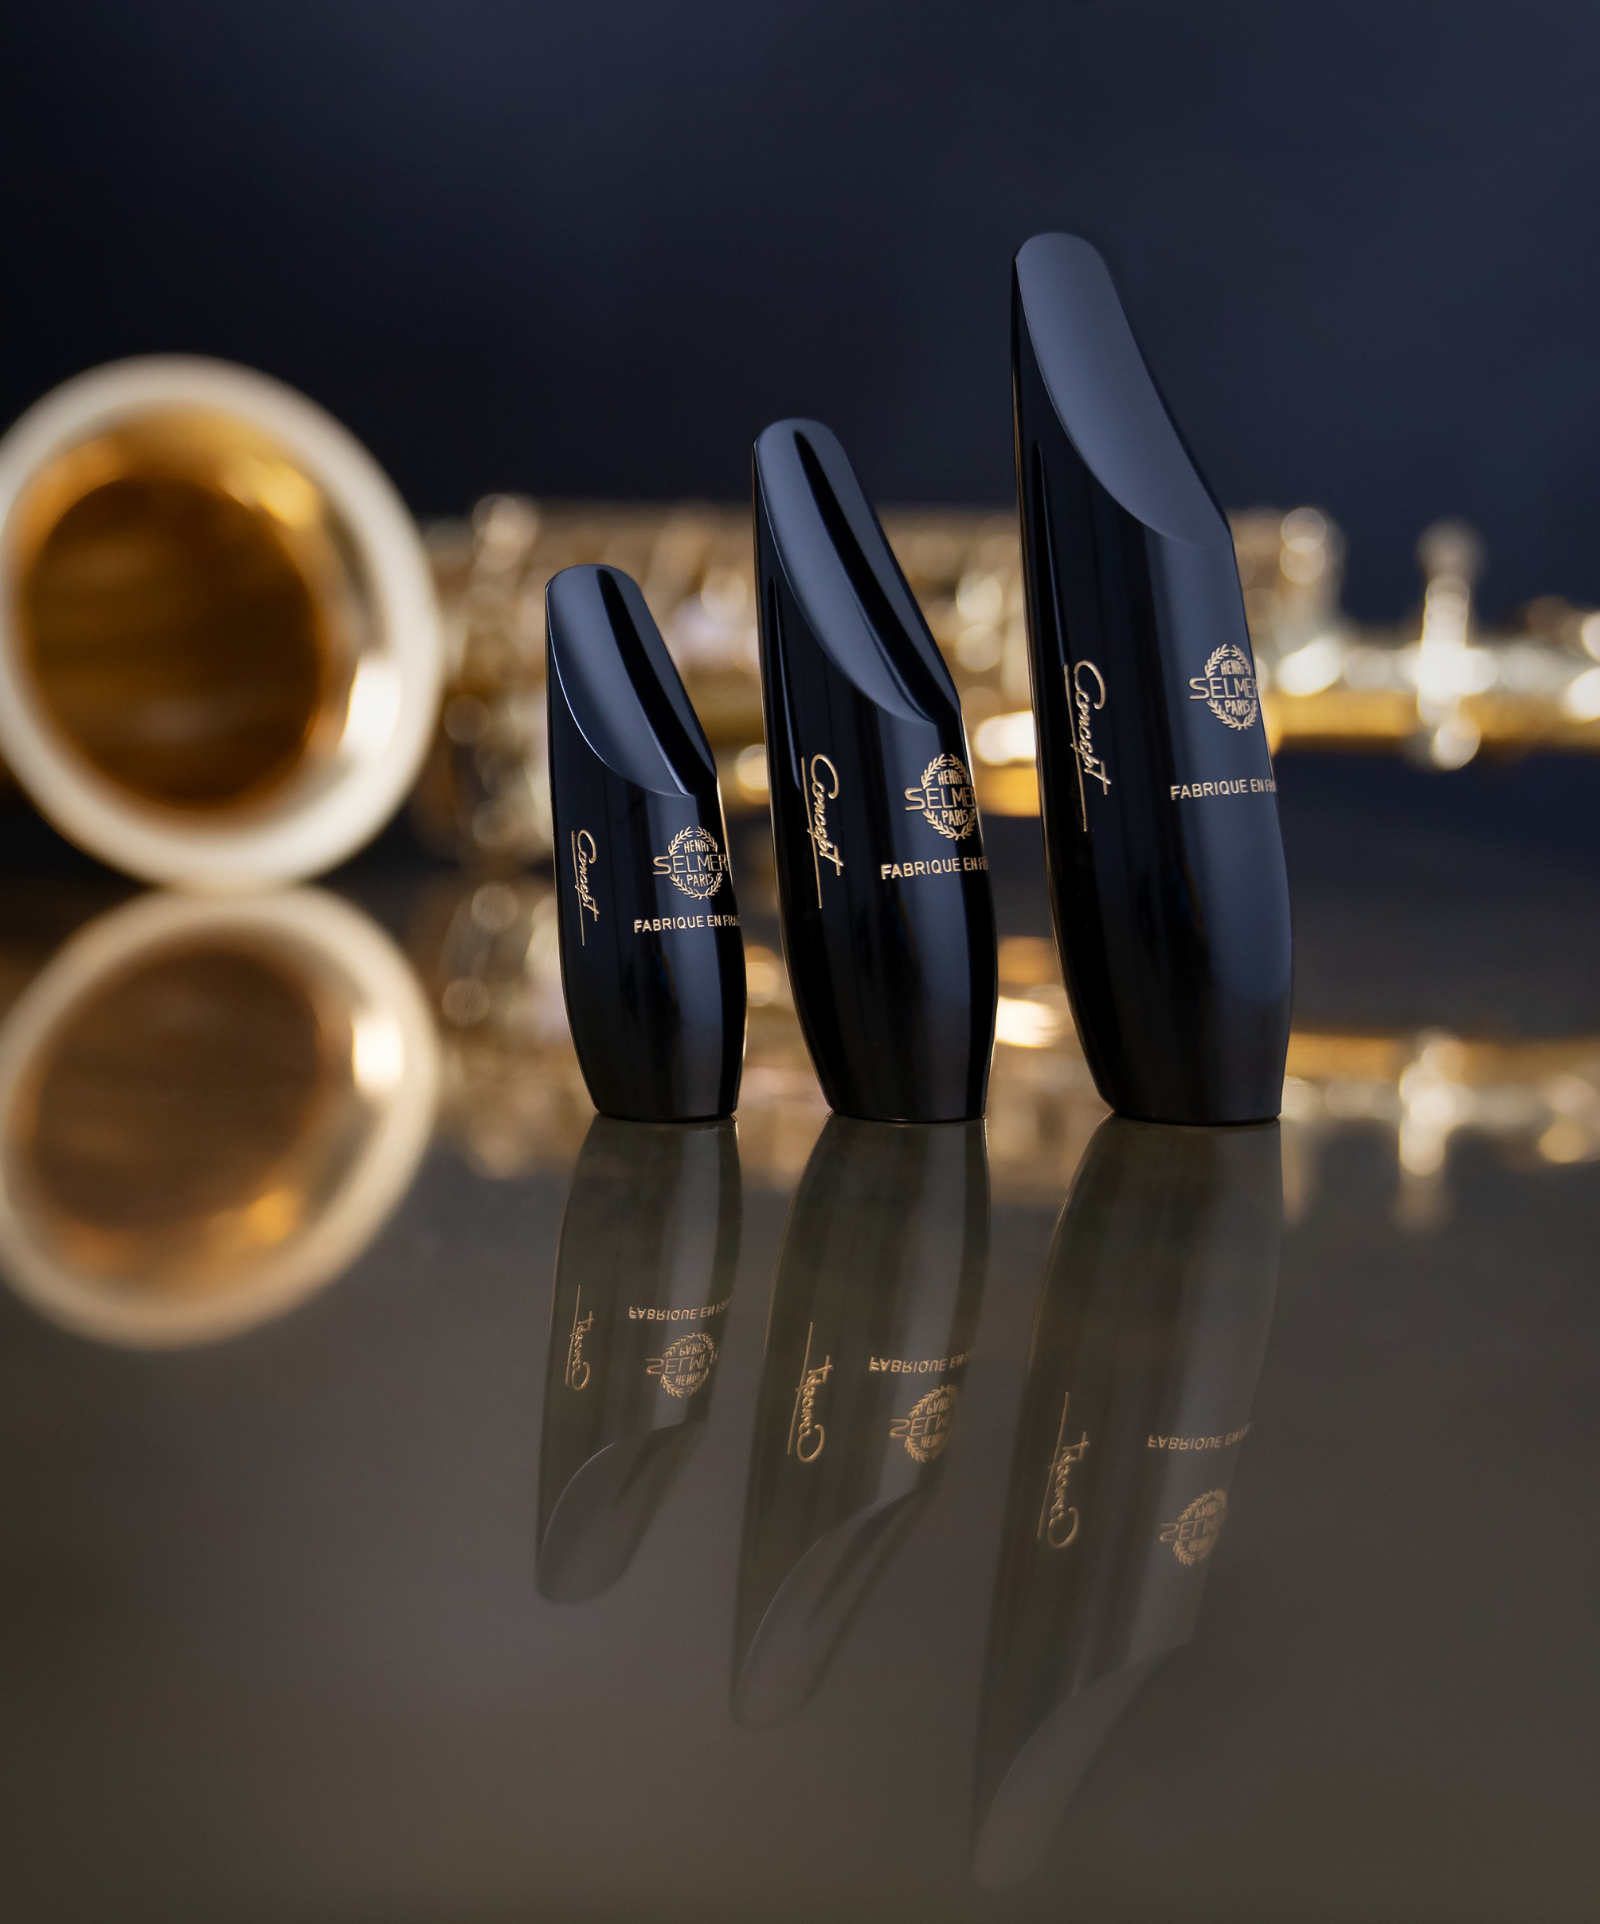 Henri SELMER Paris - Concept mouthpiece for soprano saxophone